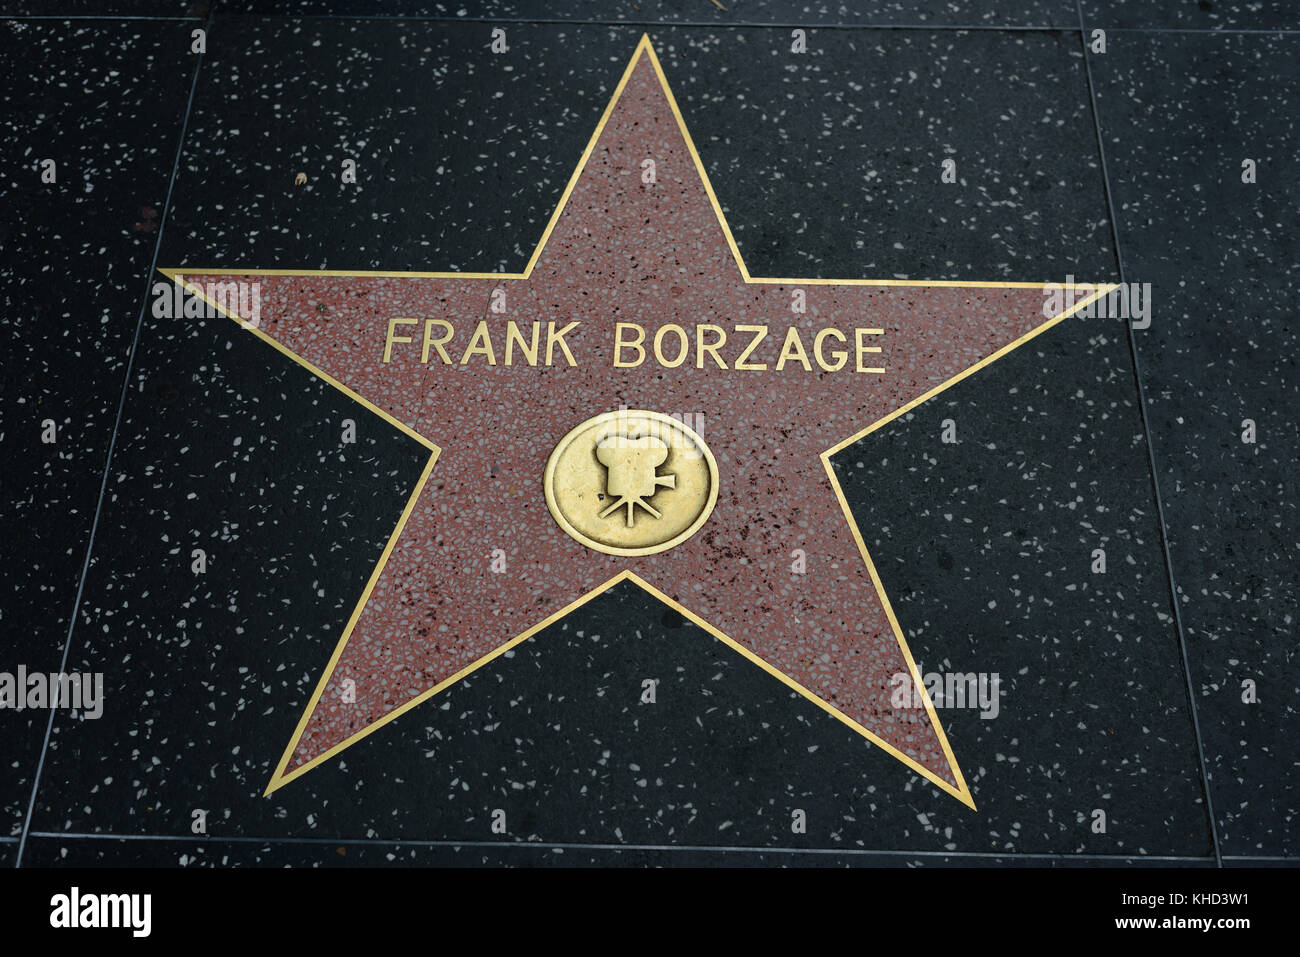 HOLLYWOOD, CA - DEZEMBER 06: Frank Borzage Star auf dem Hollywood Walk of Fame in Hollywood, Kalifornien am 6. Dezember 2016. Stockfoto